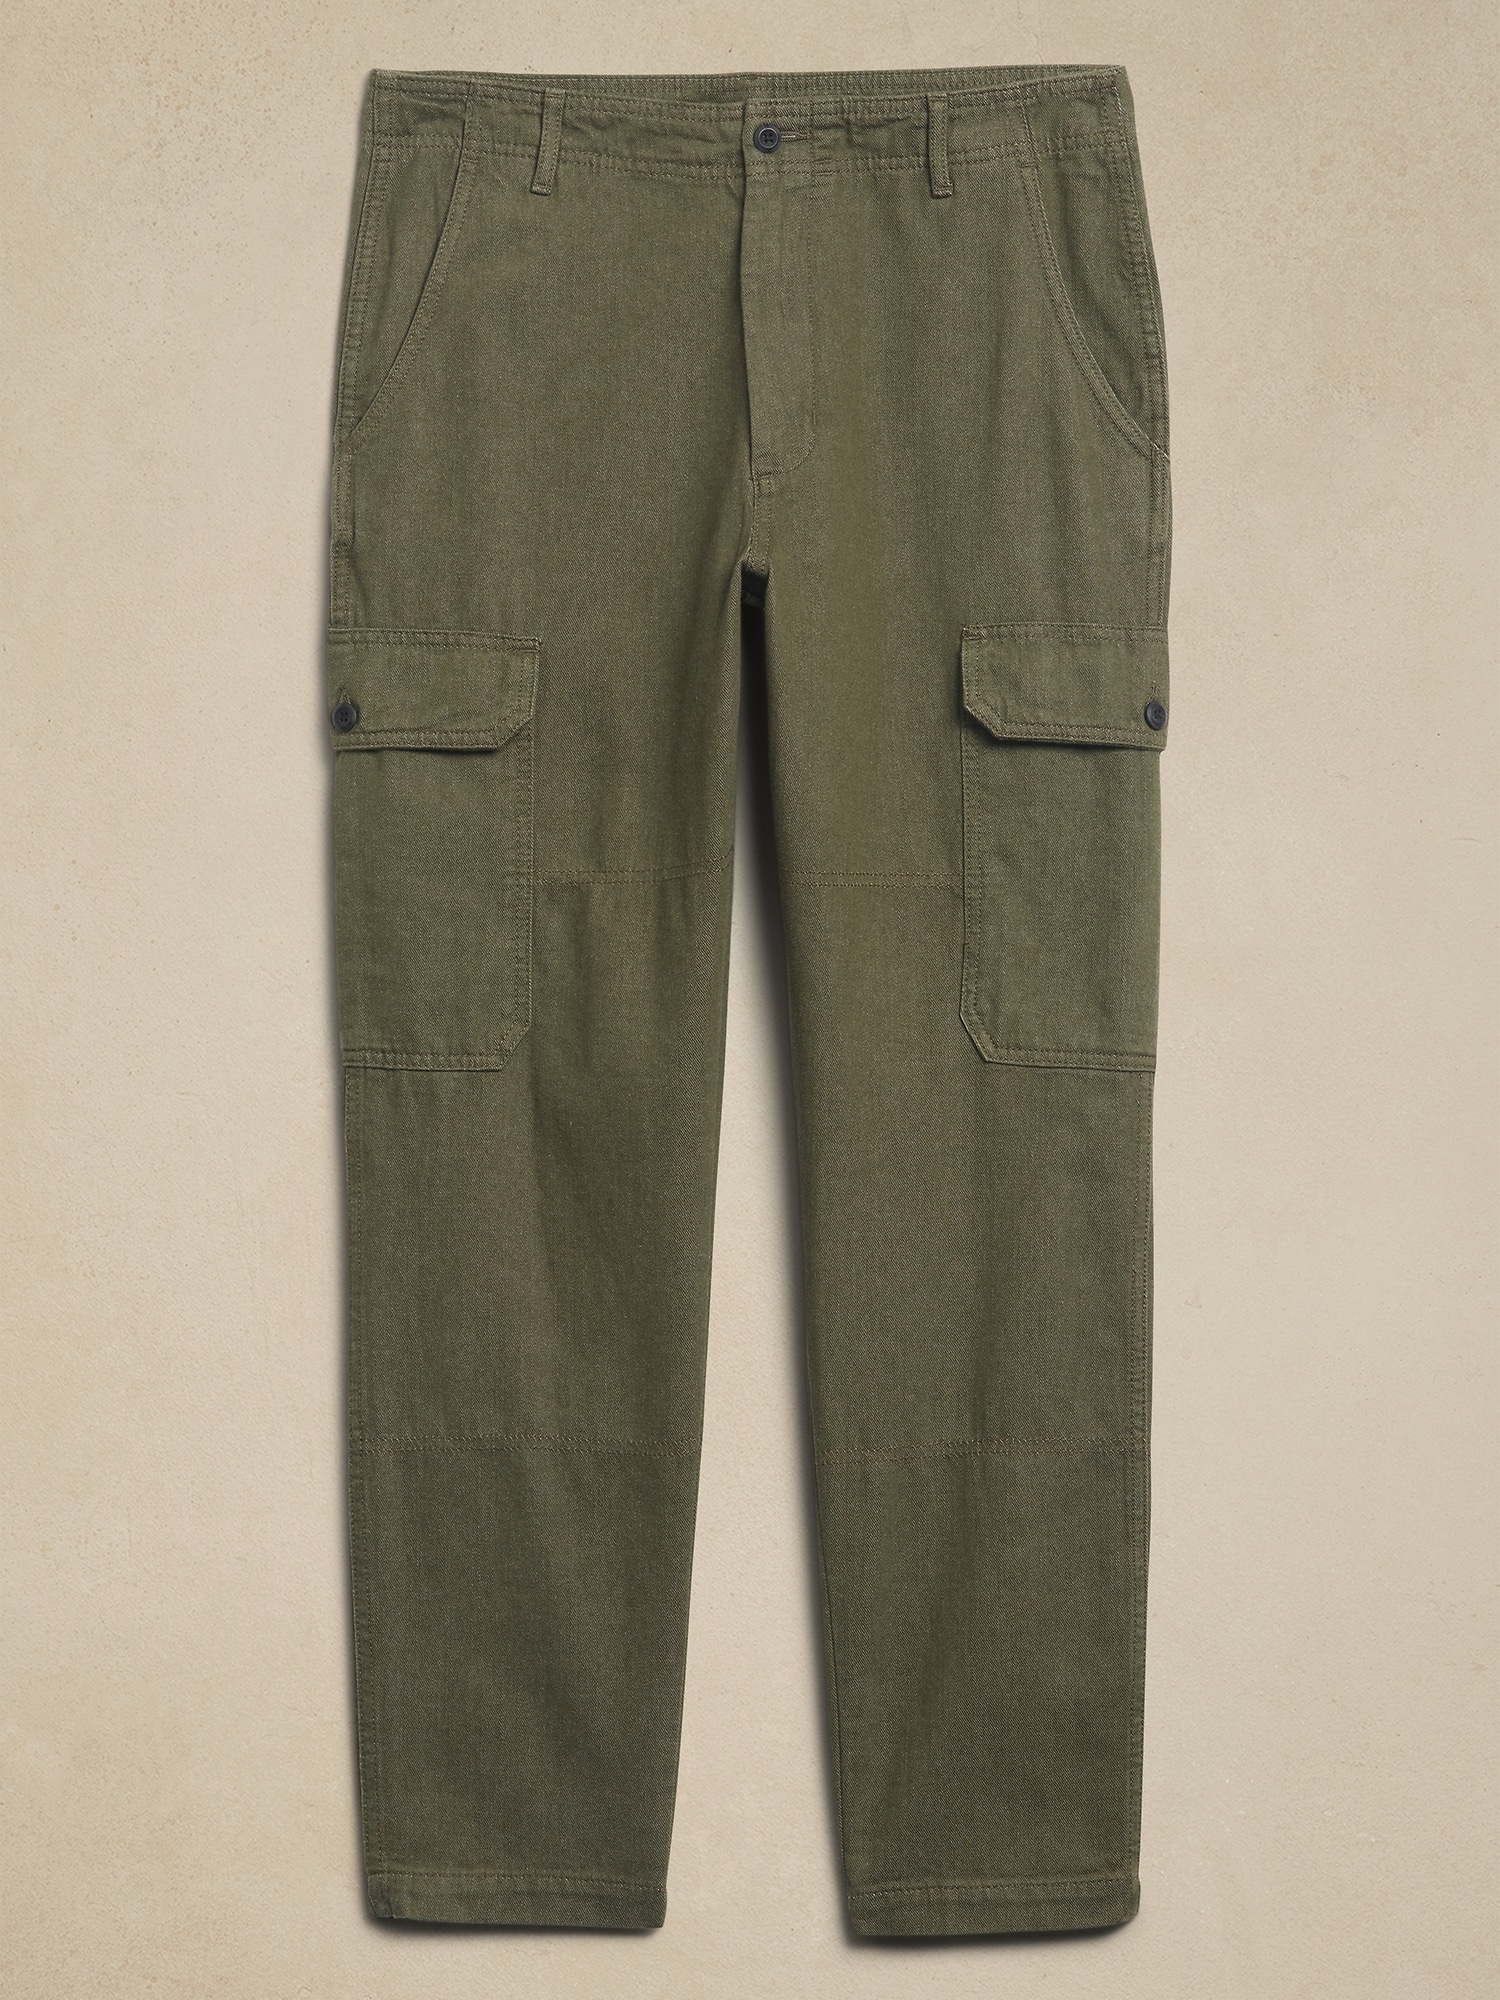 Banana Republic Moorland Surplus Tapered Cargo Pants Men’s 36x30 NEW Green